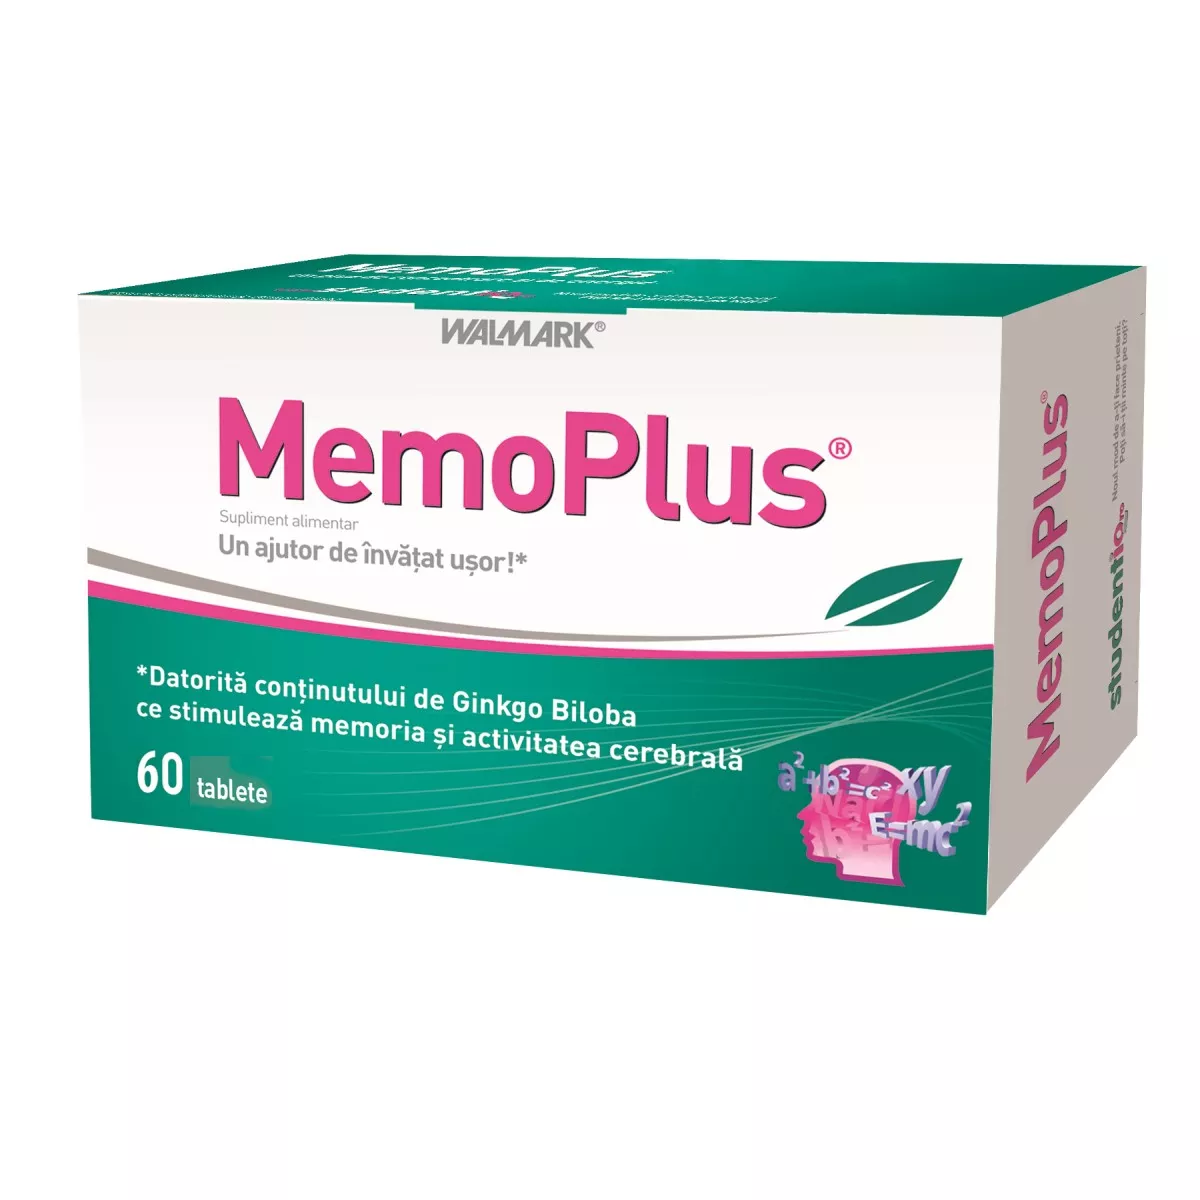 MemoPlus, 60 tablete, Walmark, [],nordpharm.ro